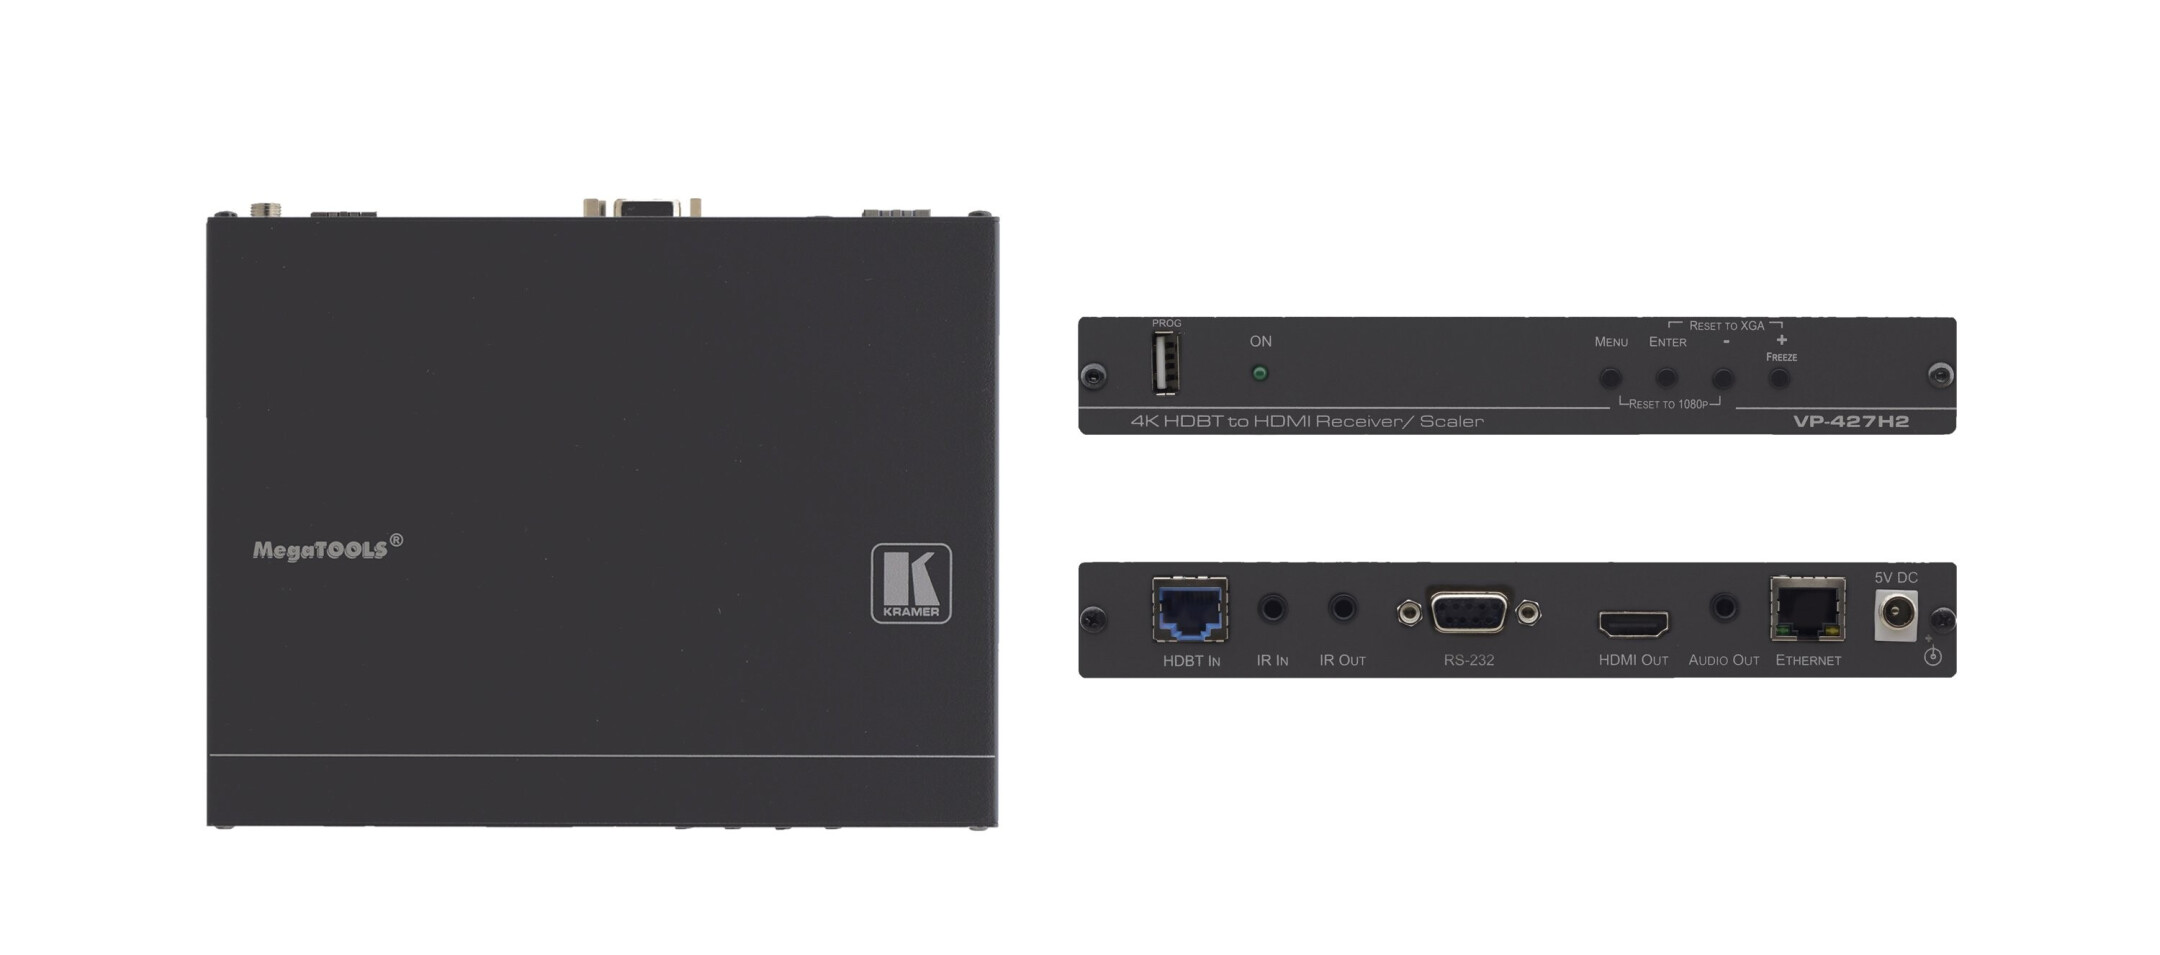 Kramer-VP-427H2-4K60-4-4-4-HDMI-HDCP-2-2-Empfanger-Scaler-uber-Extended-Reach-HDBaseT